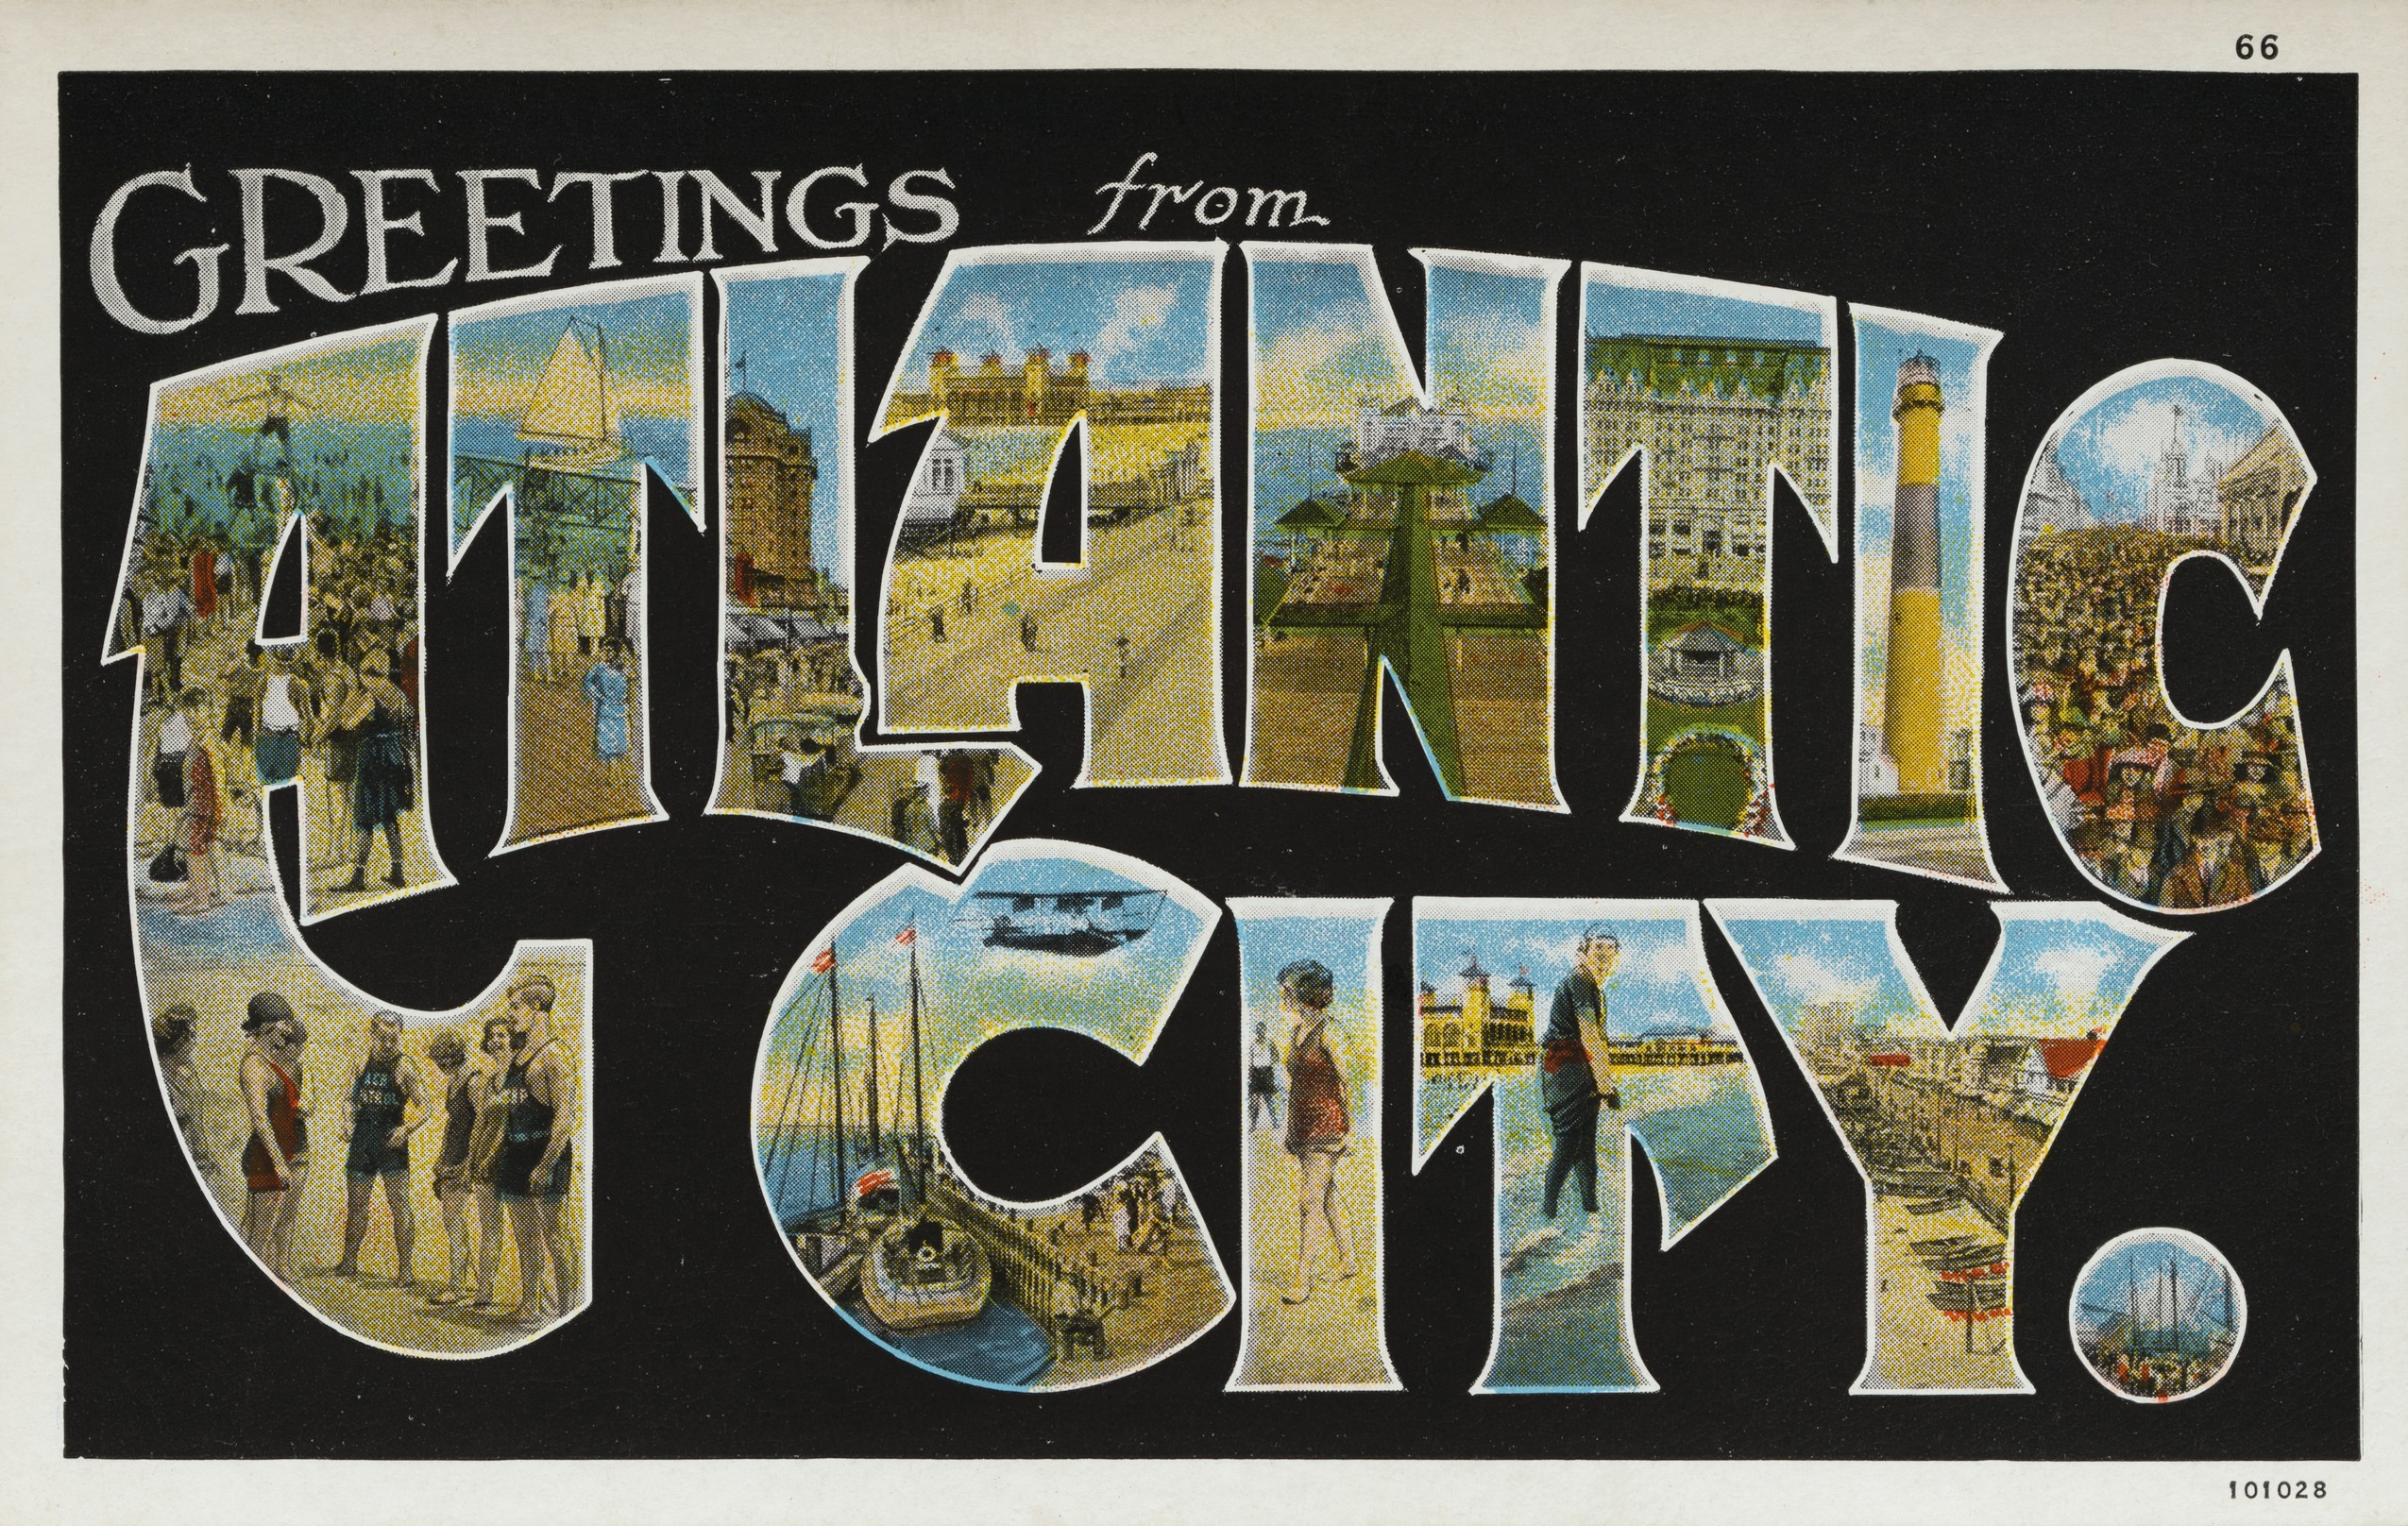 PHOTO: A greeting card from Atlantic City, N.J., circa 1930.